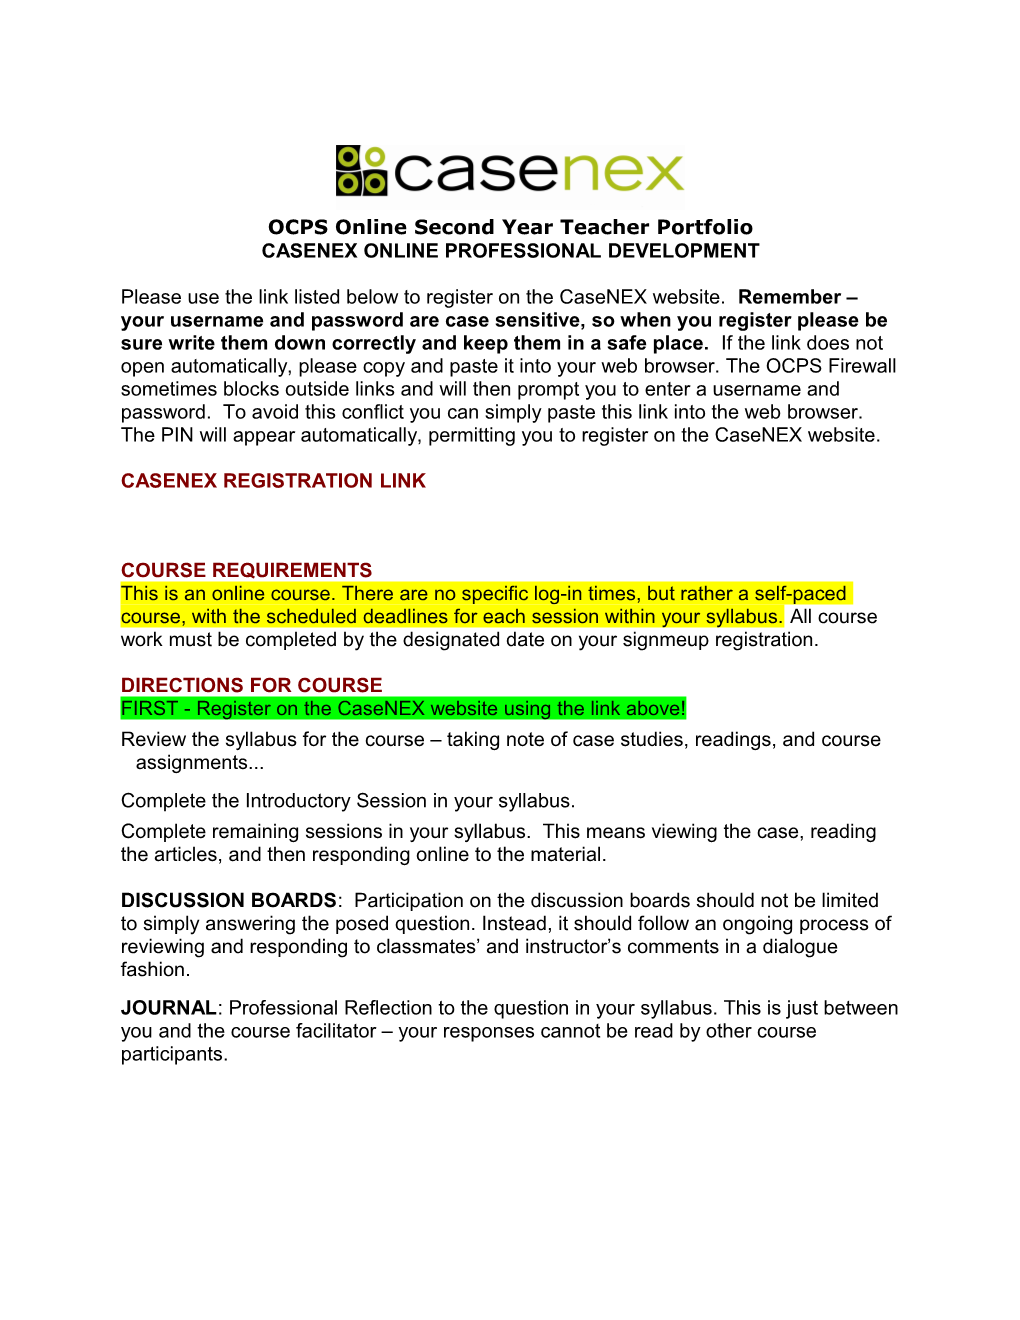 Casenex Online Professional Development